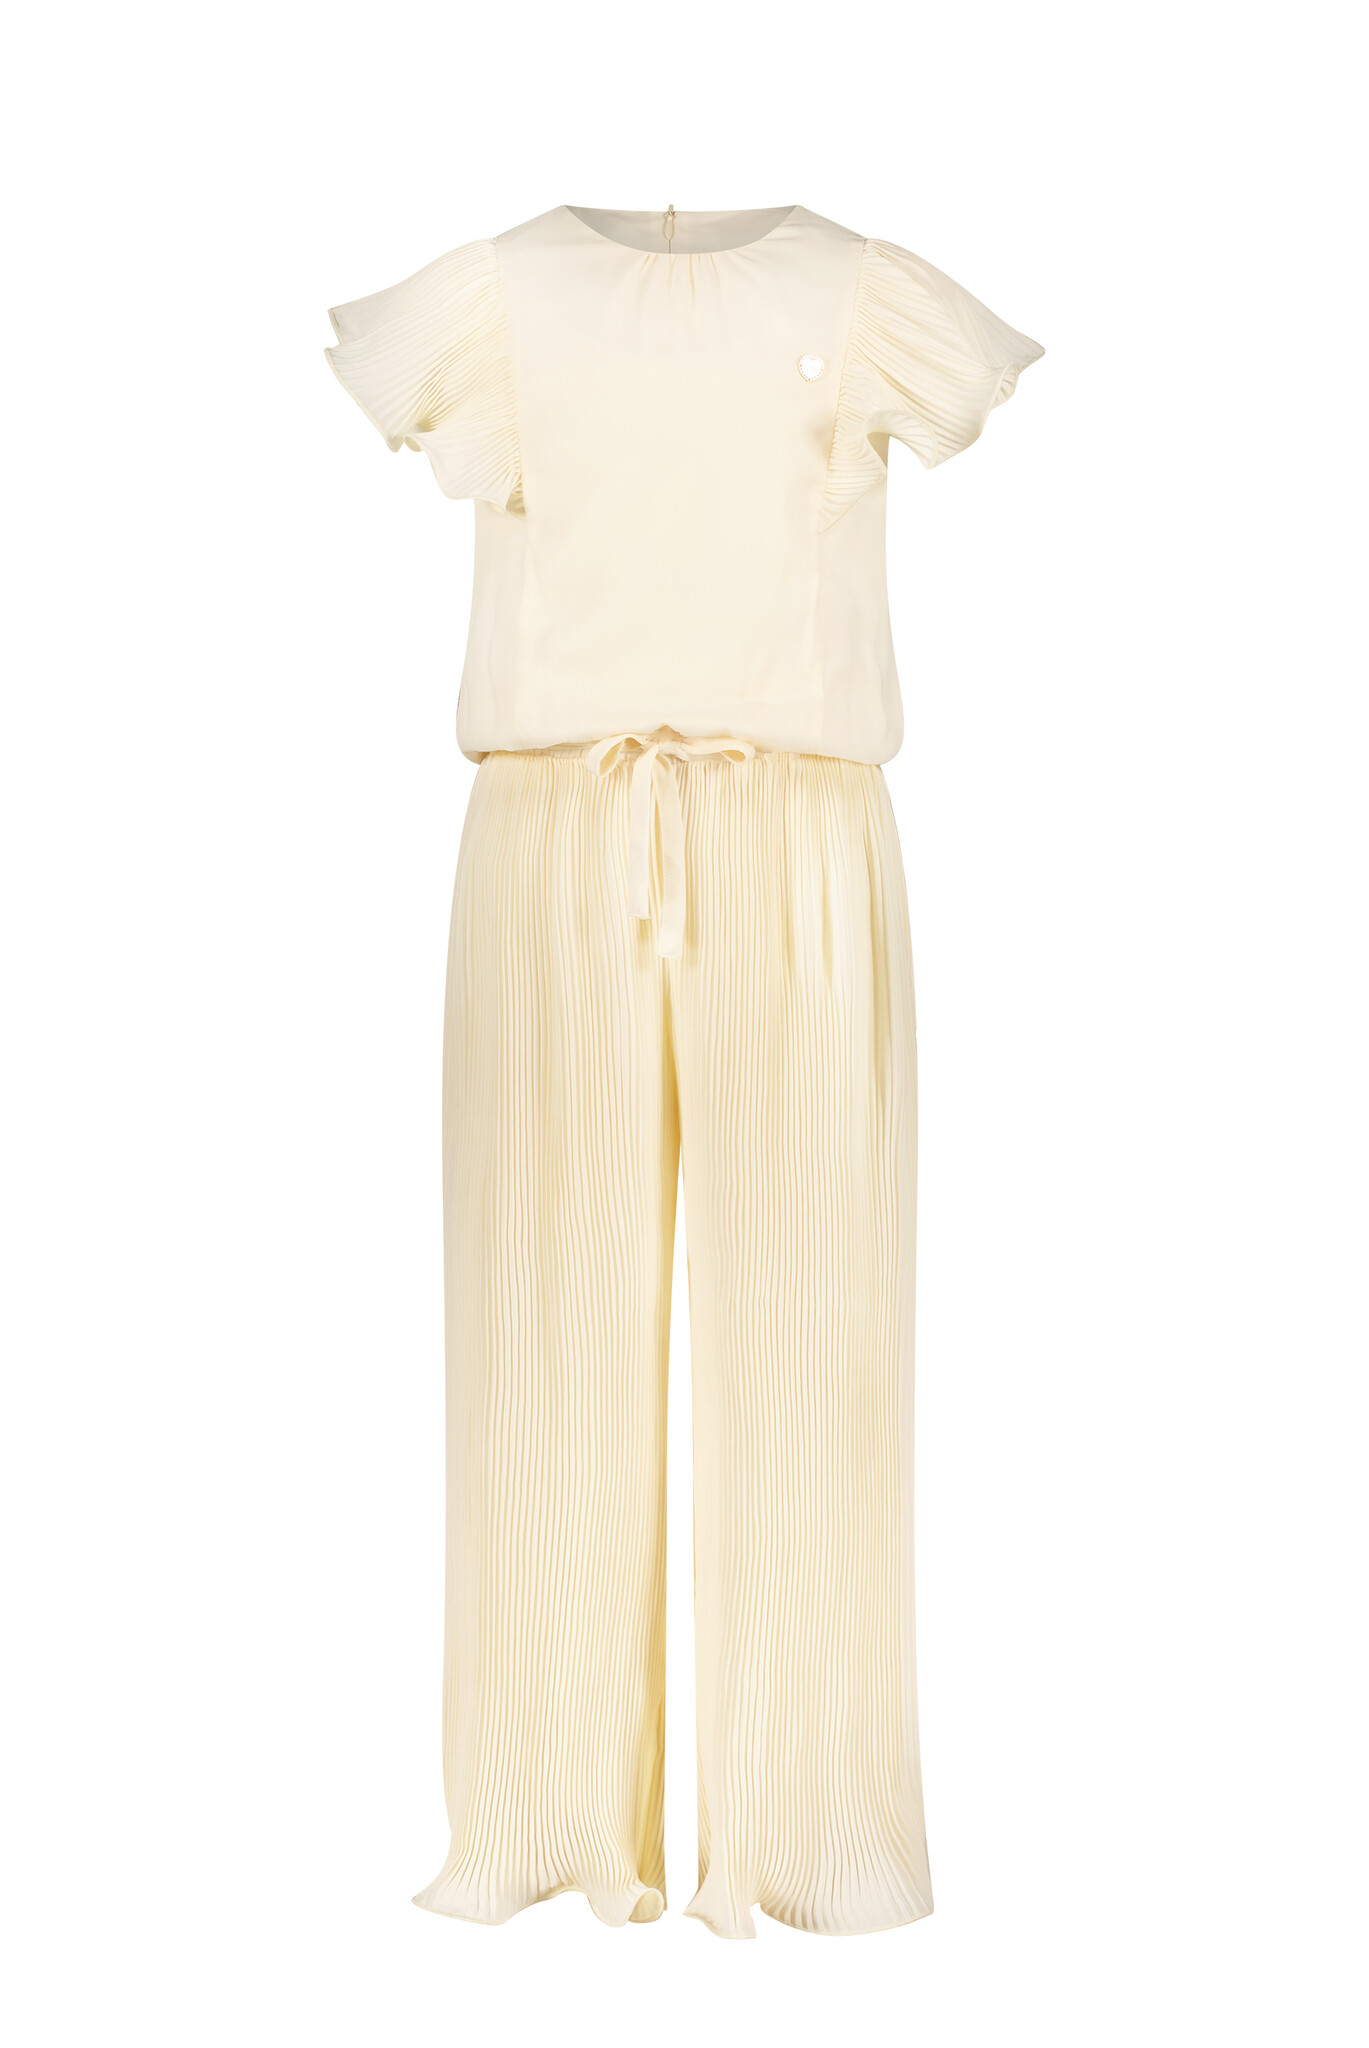 Le Chic C312-5631 Meisjes Jumpsuit - Pearled Ivory - Maat 128